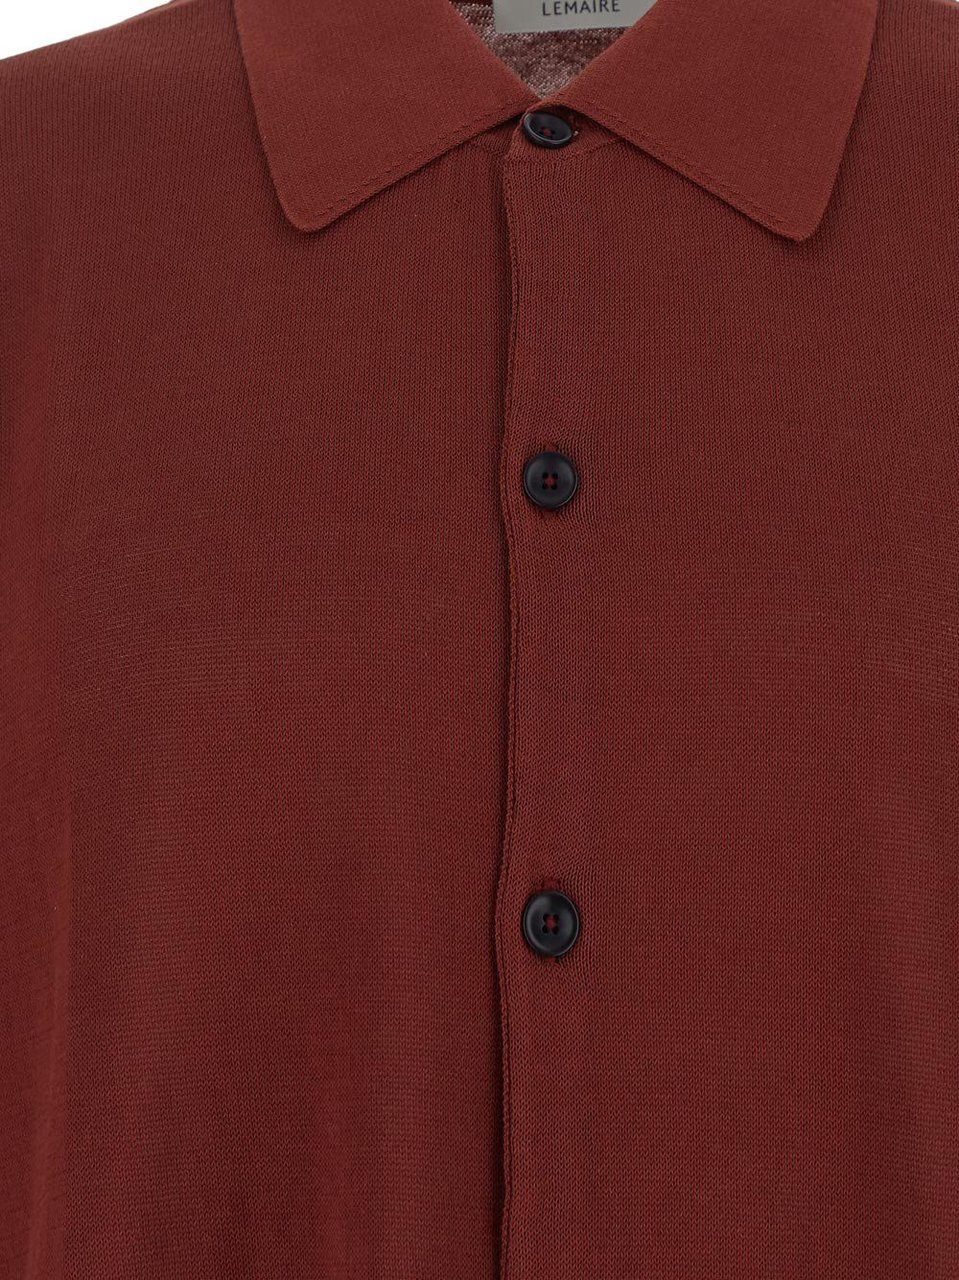 Lemaire Cotton Shirt Rood